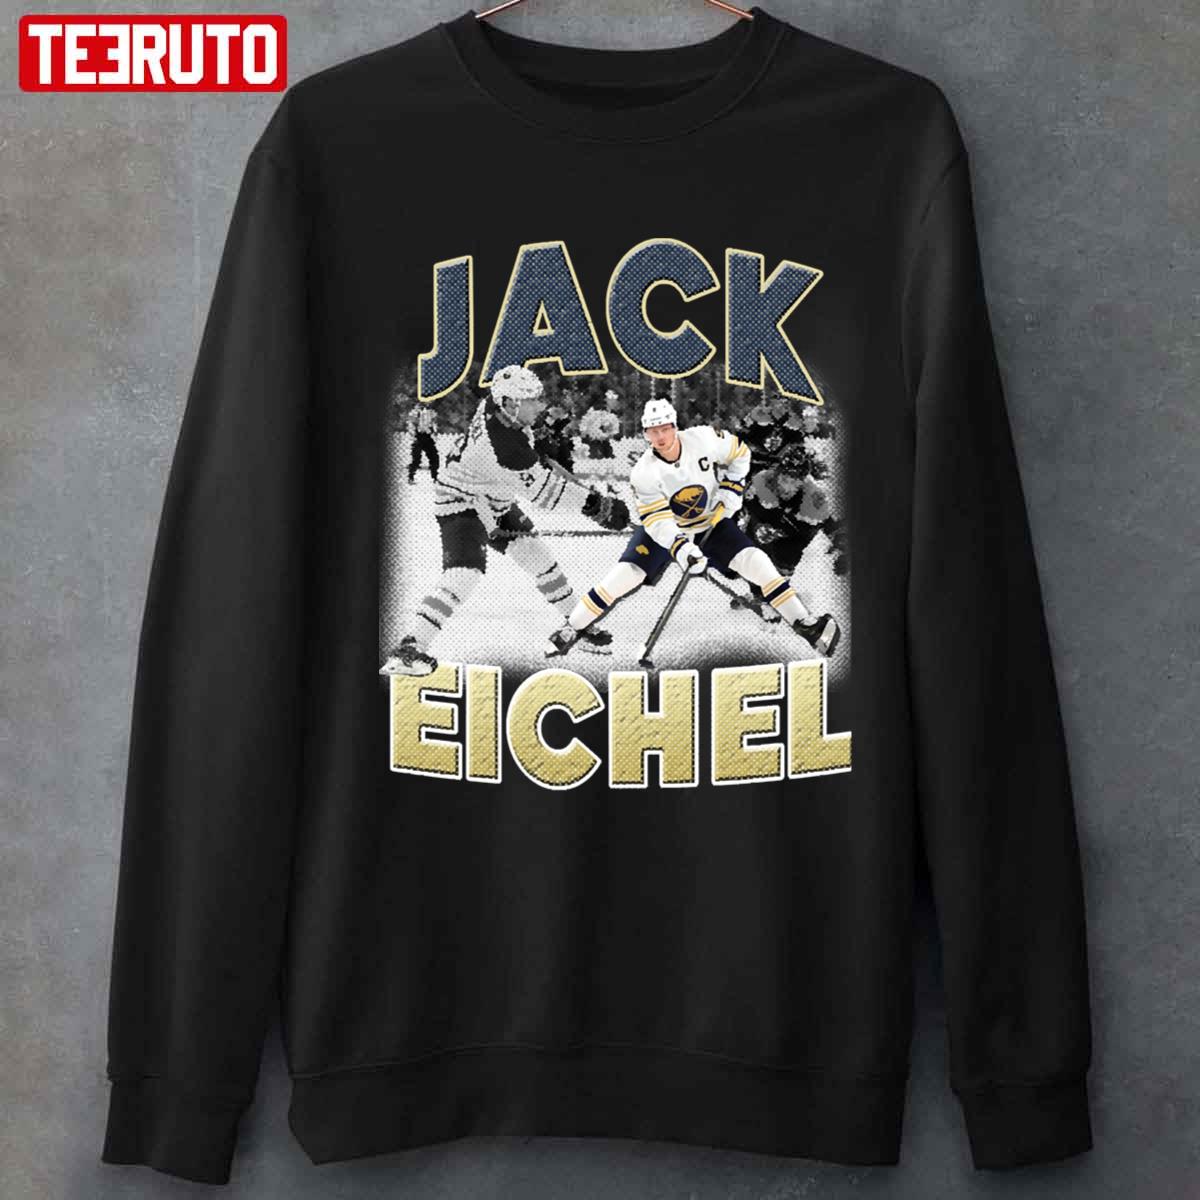 Jack Eichel Bootleg Vintage Unisex T-Shirt